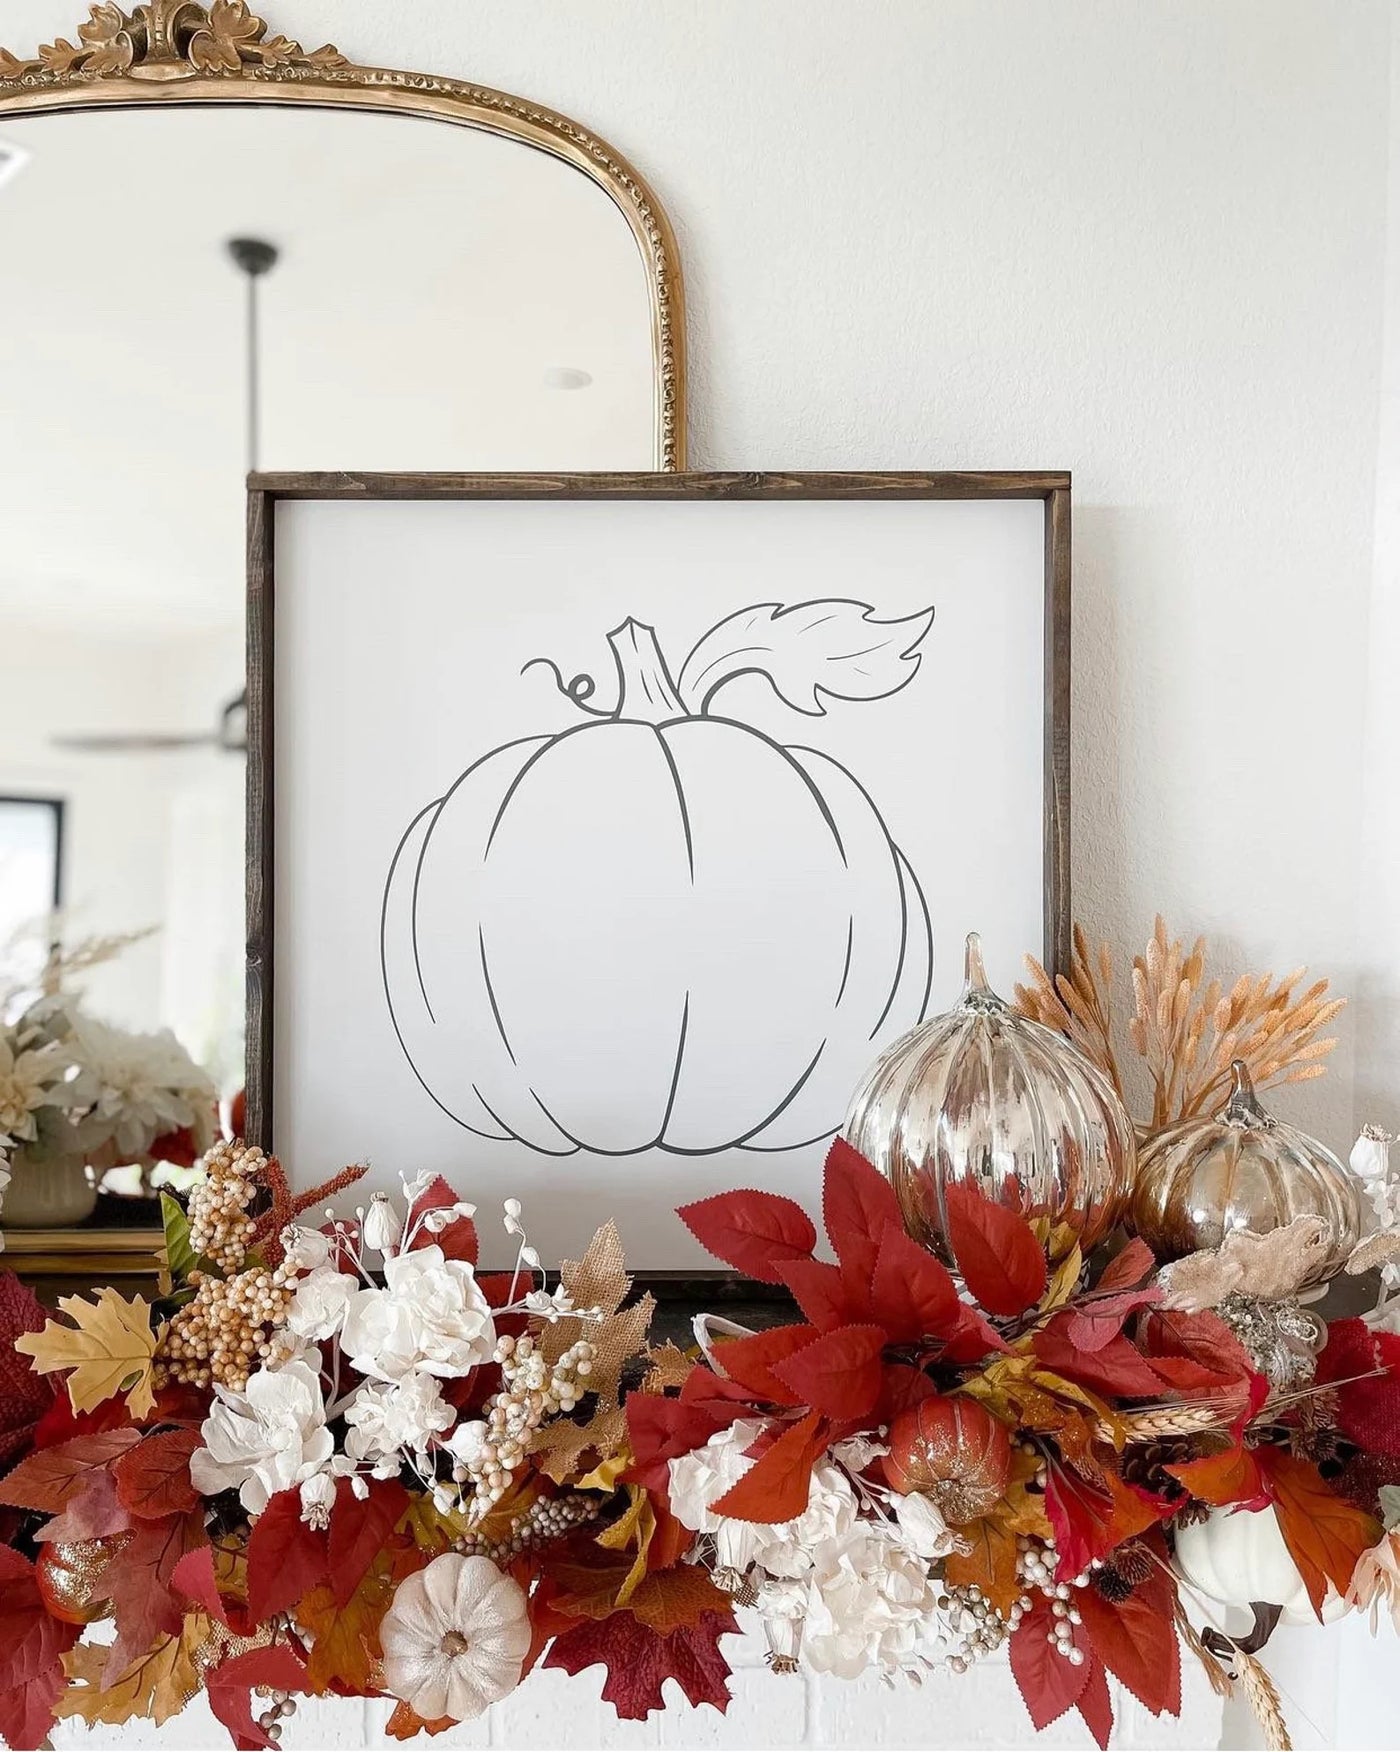 Pumpkin Signs Harvest Fall Autumn decor decorations